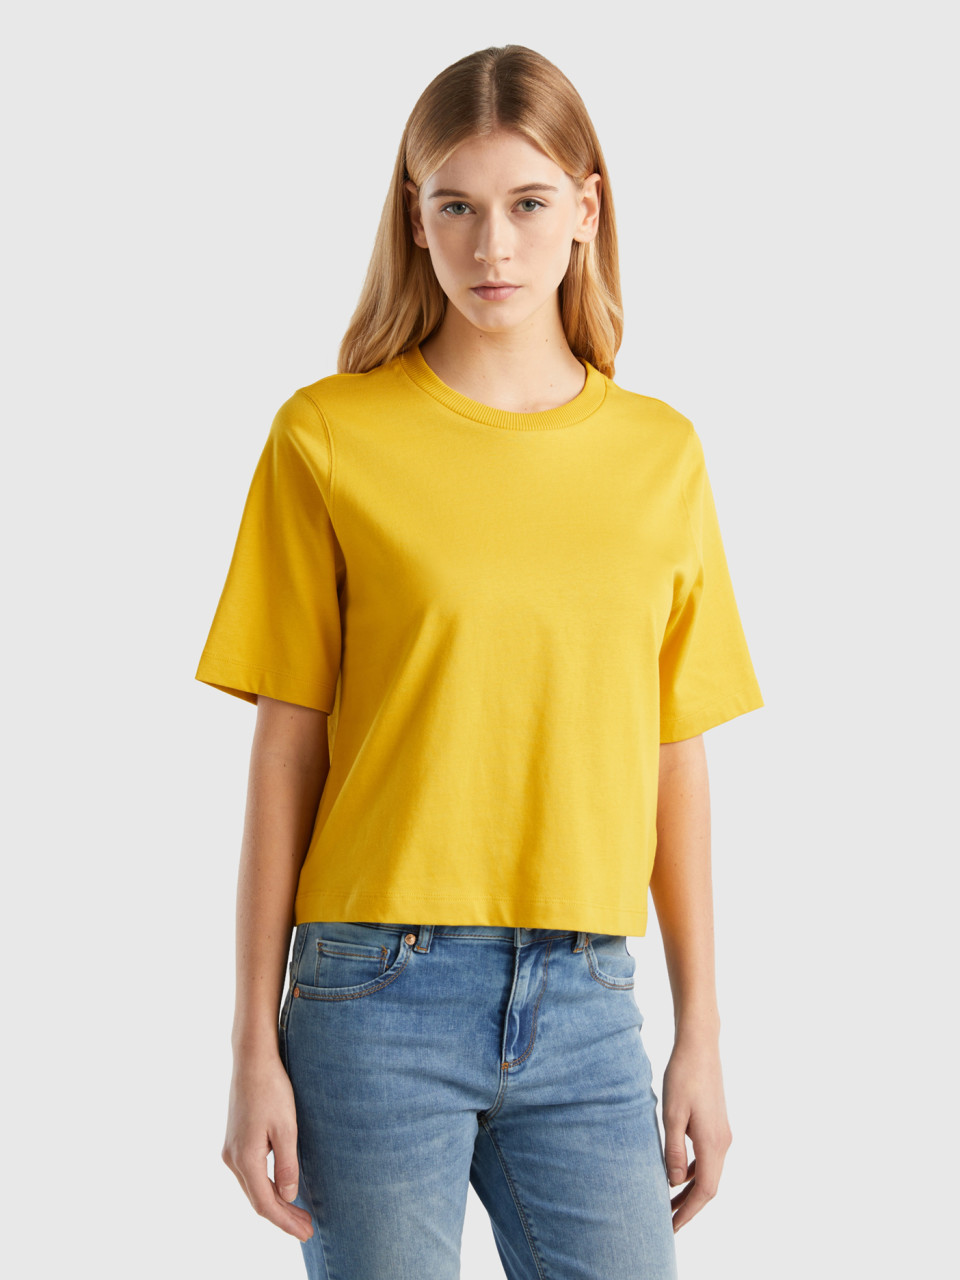 Benetton, 100% Cotton Boxy Fit T-shirt, Yellow, Women